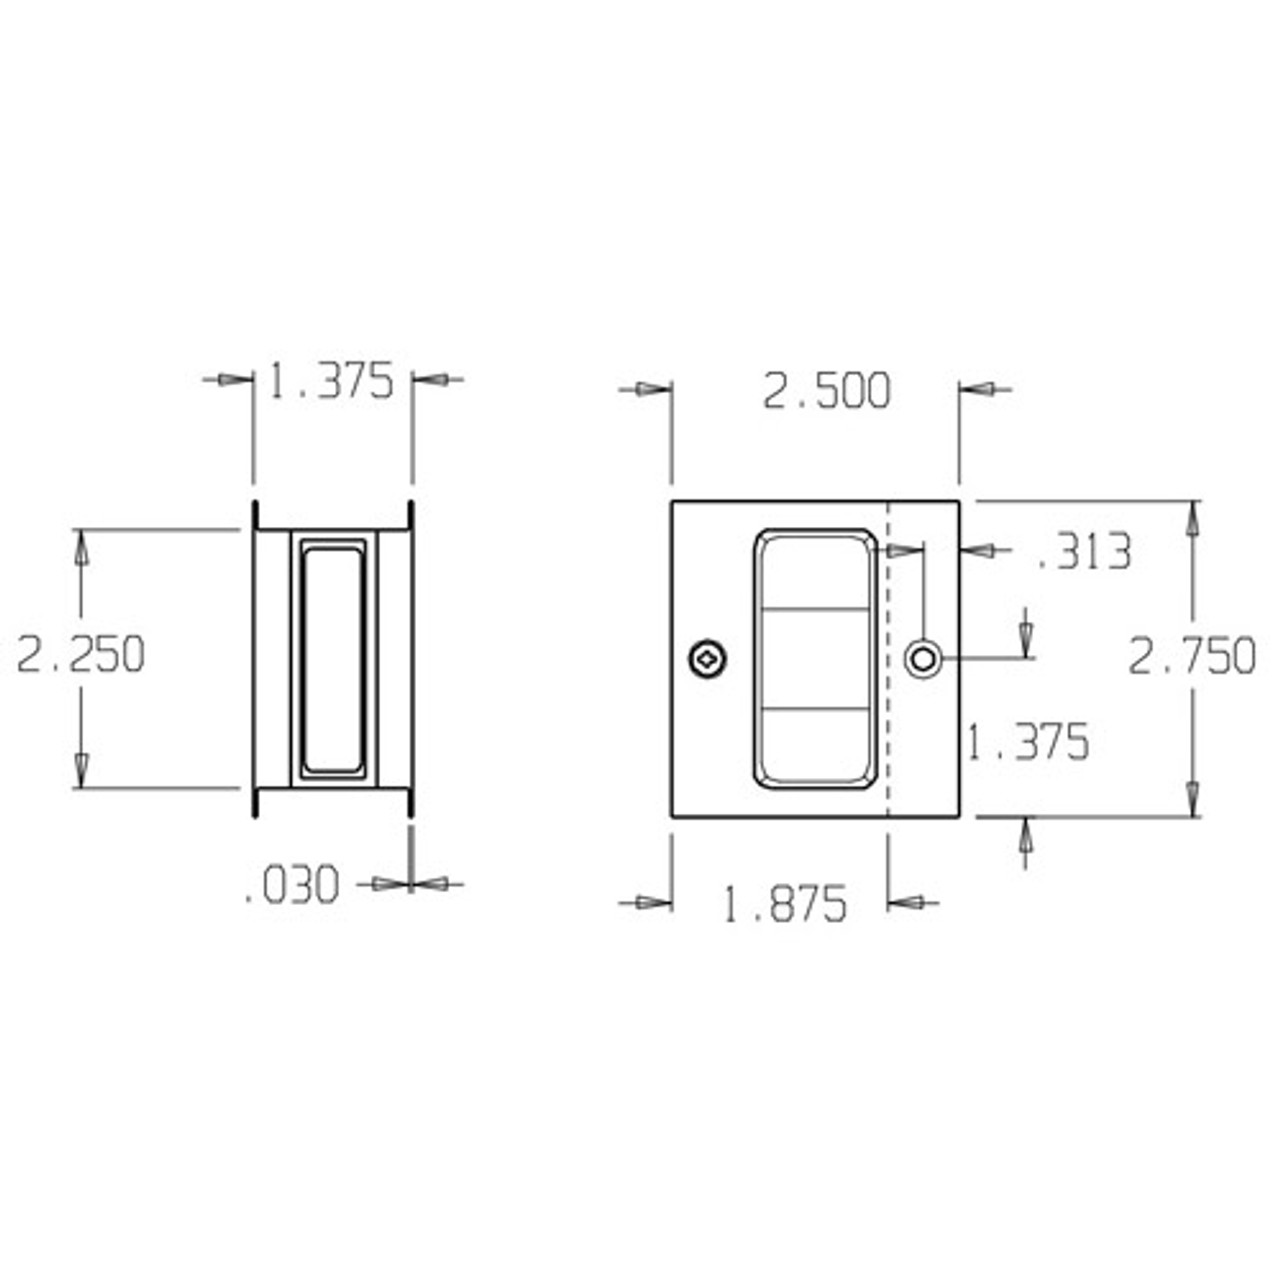 PDL-100-622 Don Jo Pocket Door Lock Dimensional View